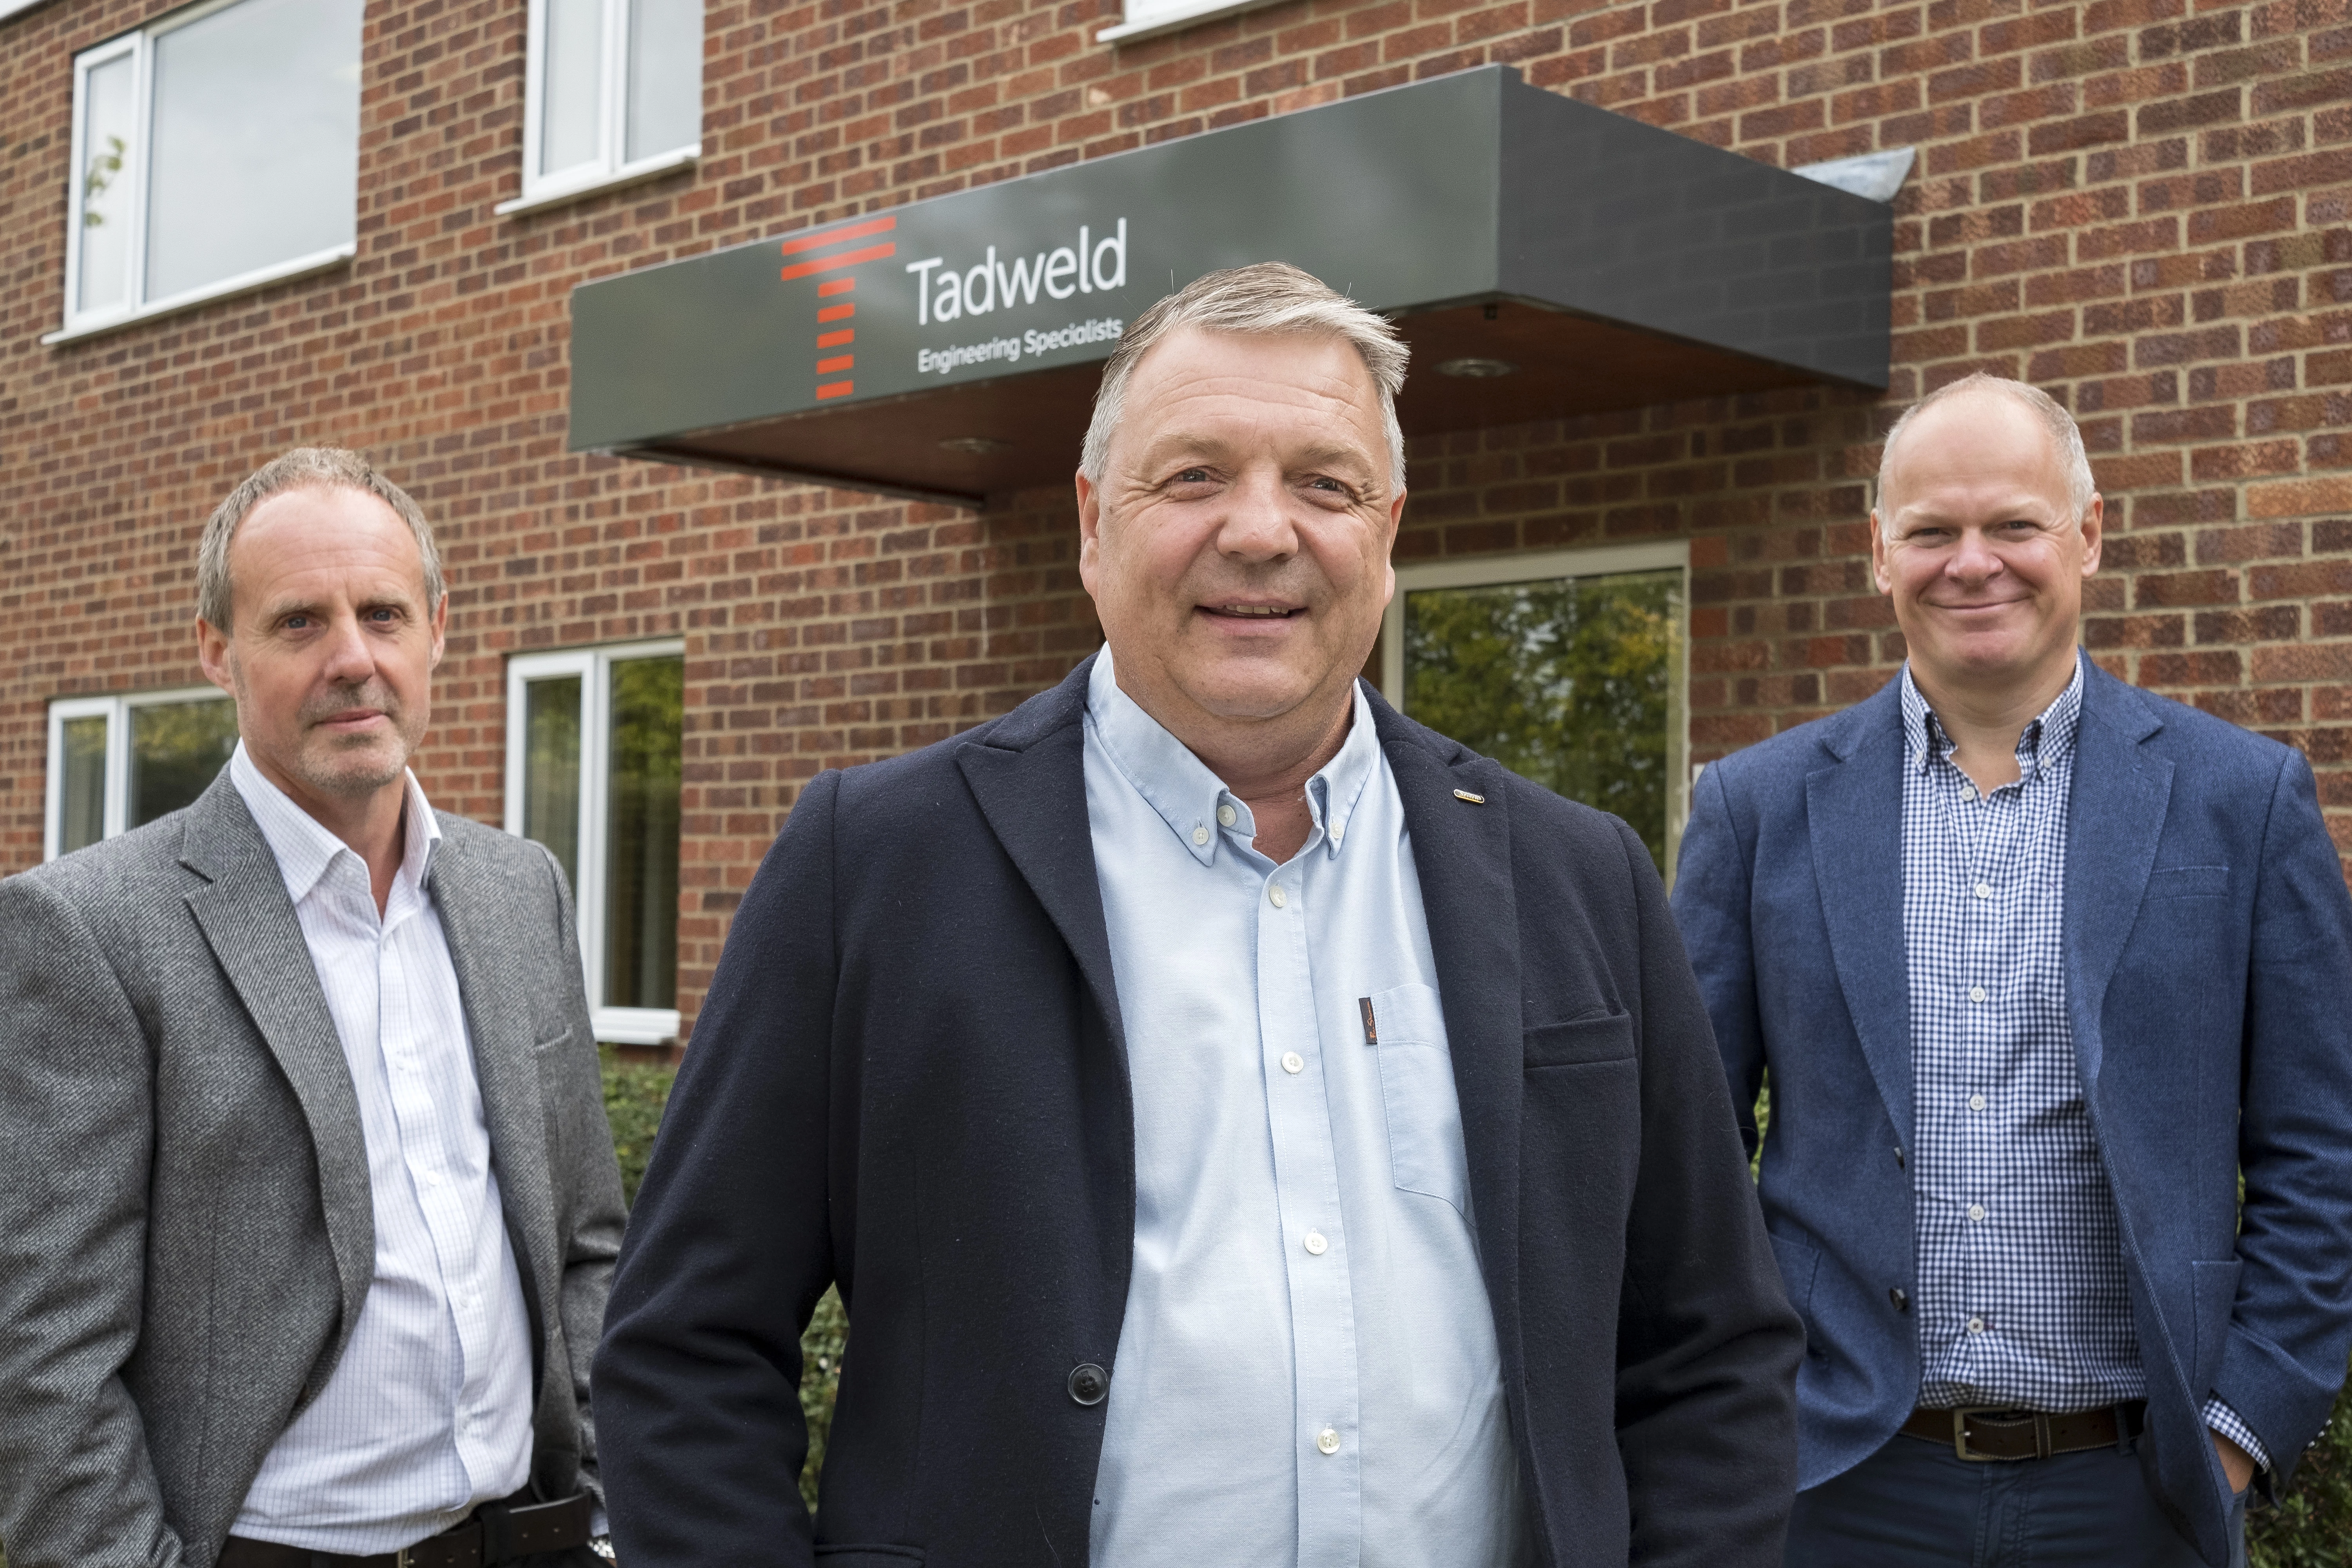 Tadweld Directors (L to R) Richard Byfield, Chris Joy, Iain Leedham1